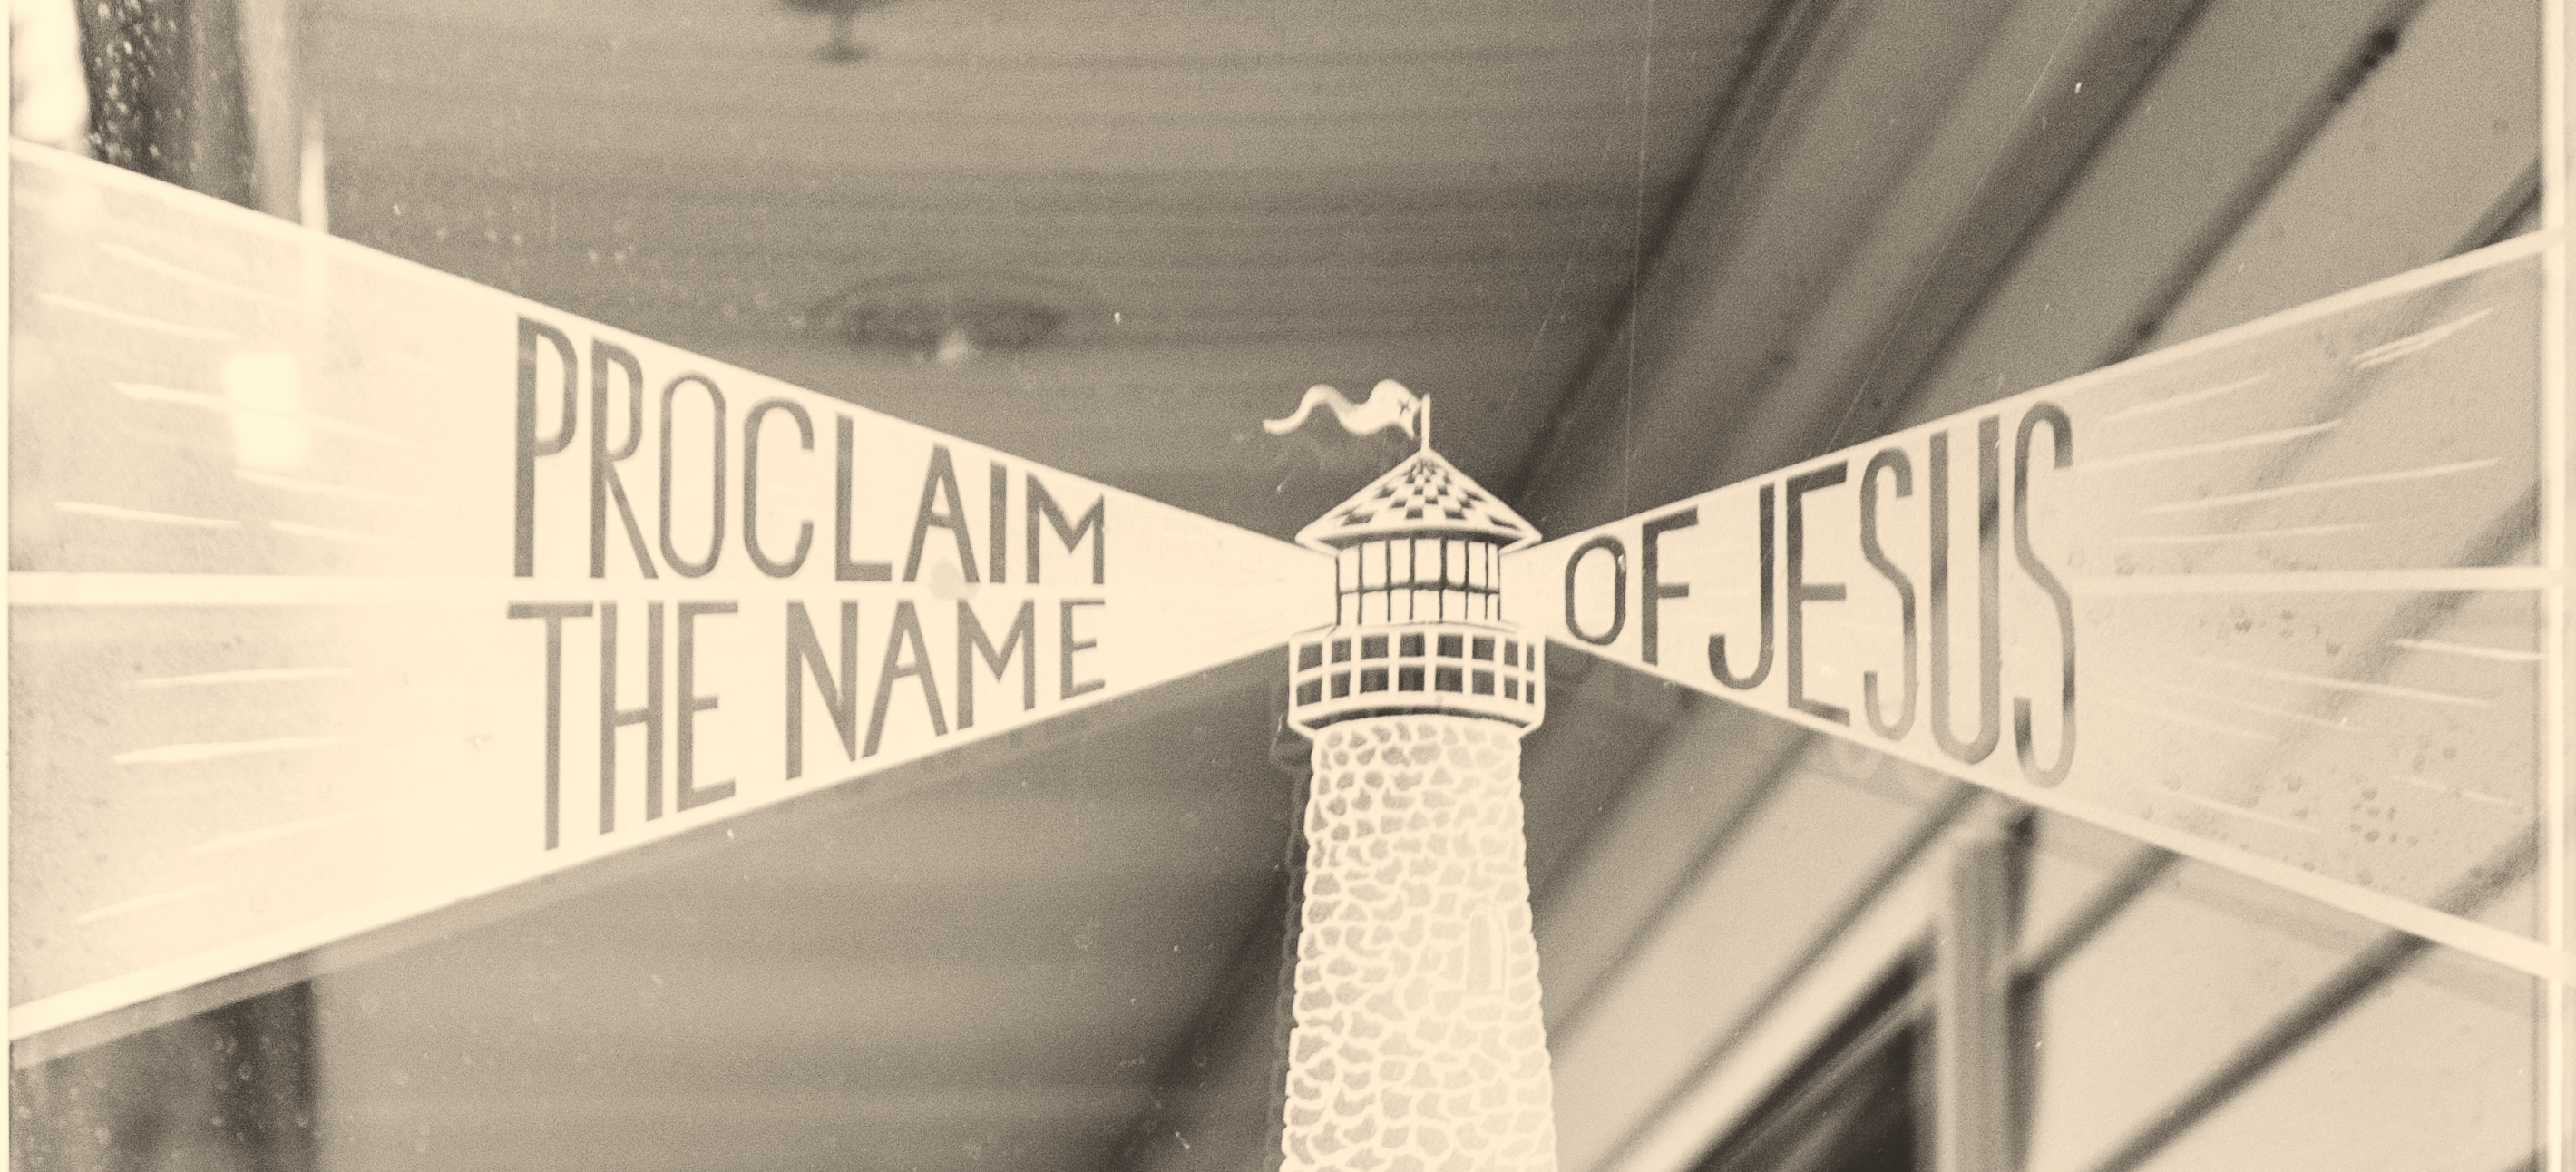 Proclaim the Name of Jesus